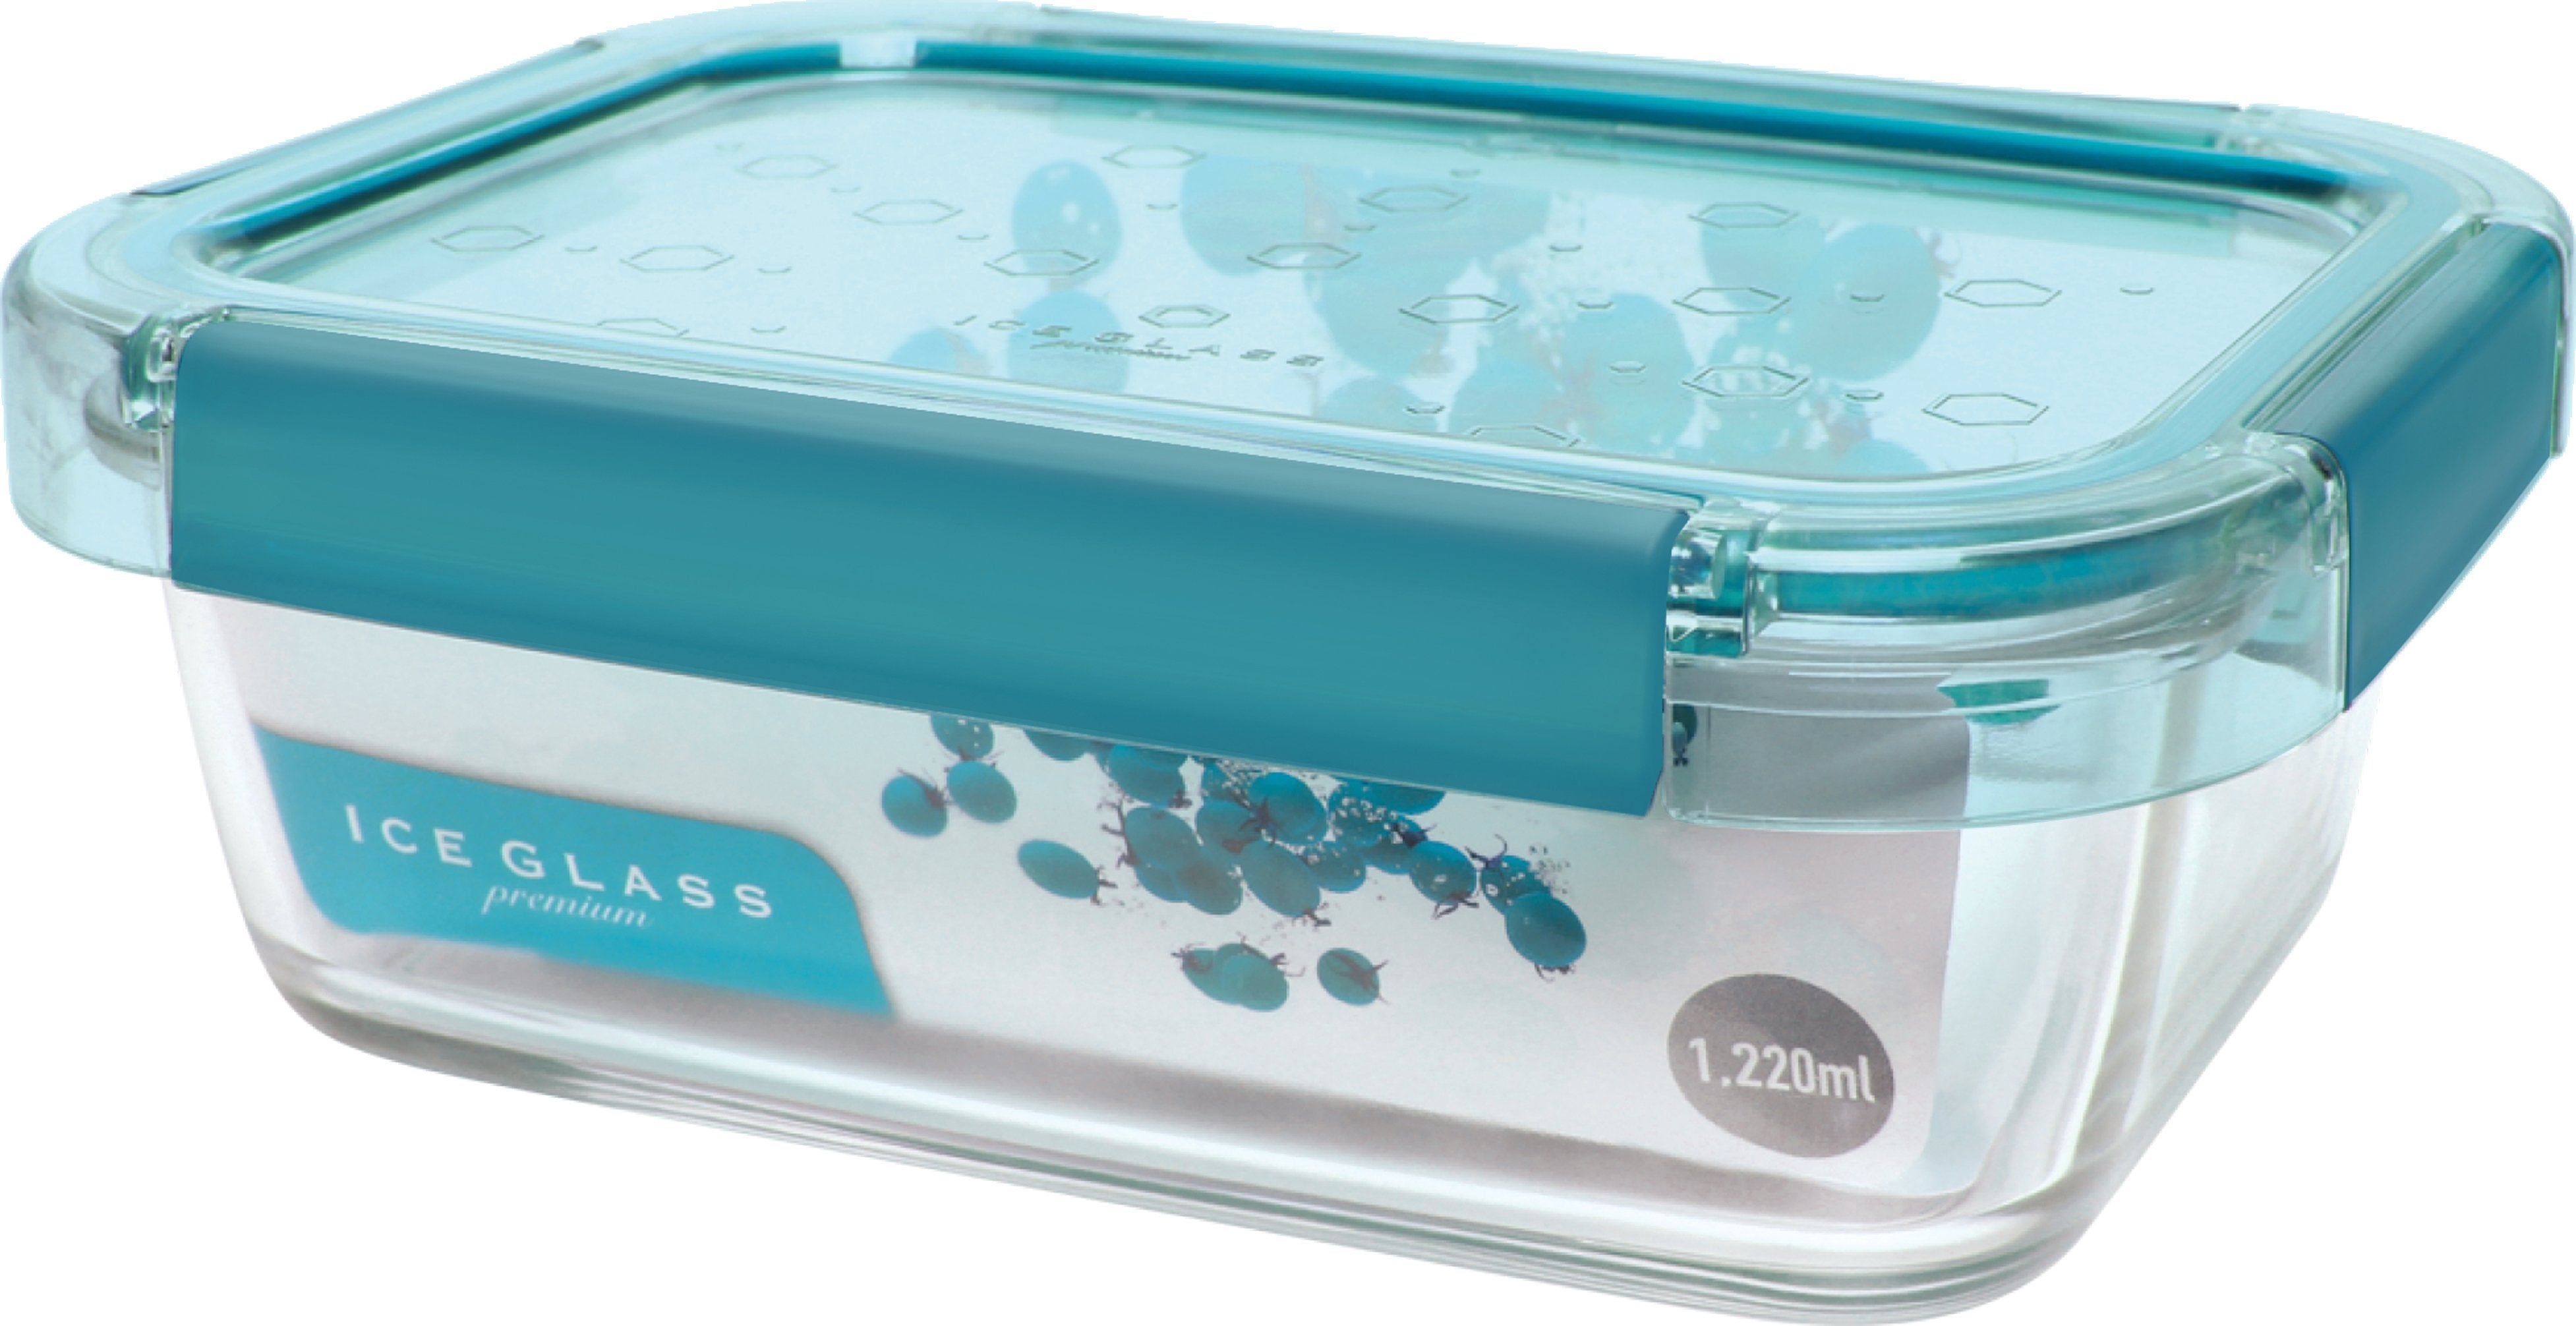 Komax Ice Glass Premium Rectangular Food Storage Container, 1.22 L (Mint)